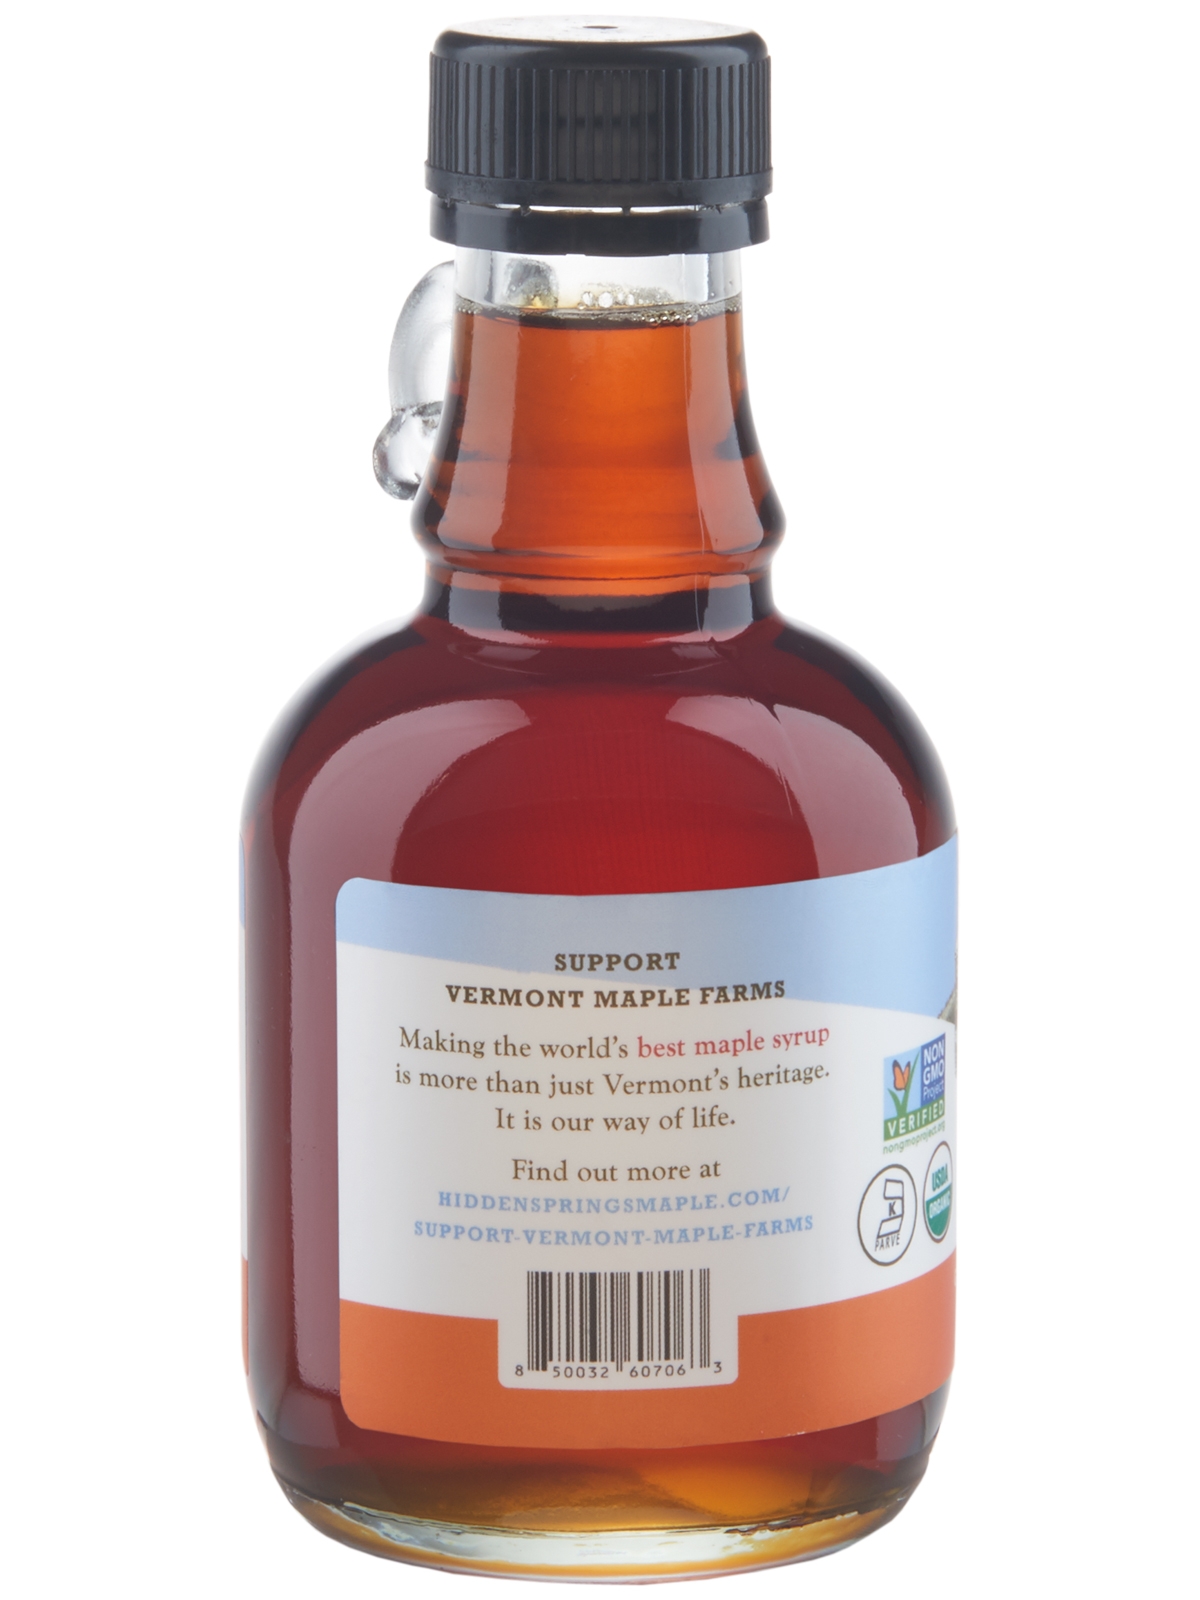 Maple Tapper Glass Maple Syrup Bottles Jars (Set of 3) with (6) Self-Sealing Caps – Reusable Leaf Shaped, Food Grade Canning Bottles 250 mL, 8.4 oz